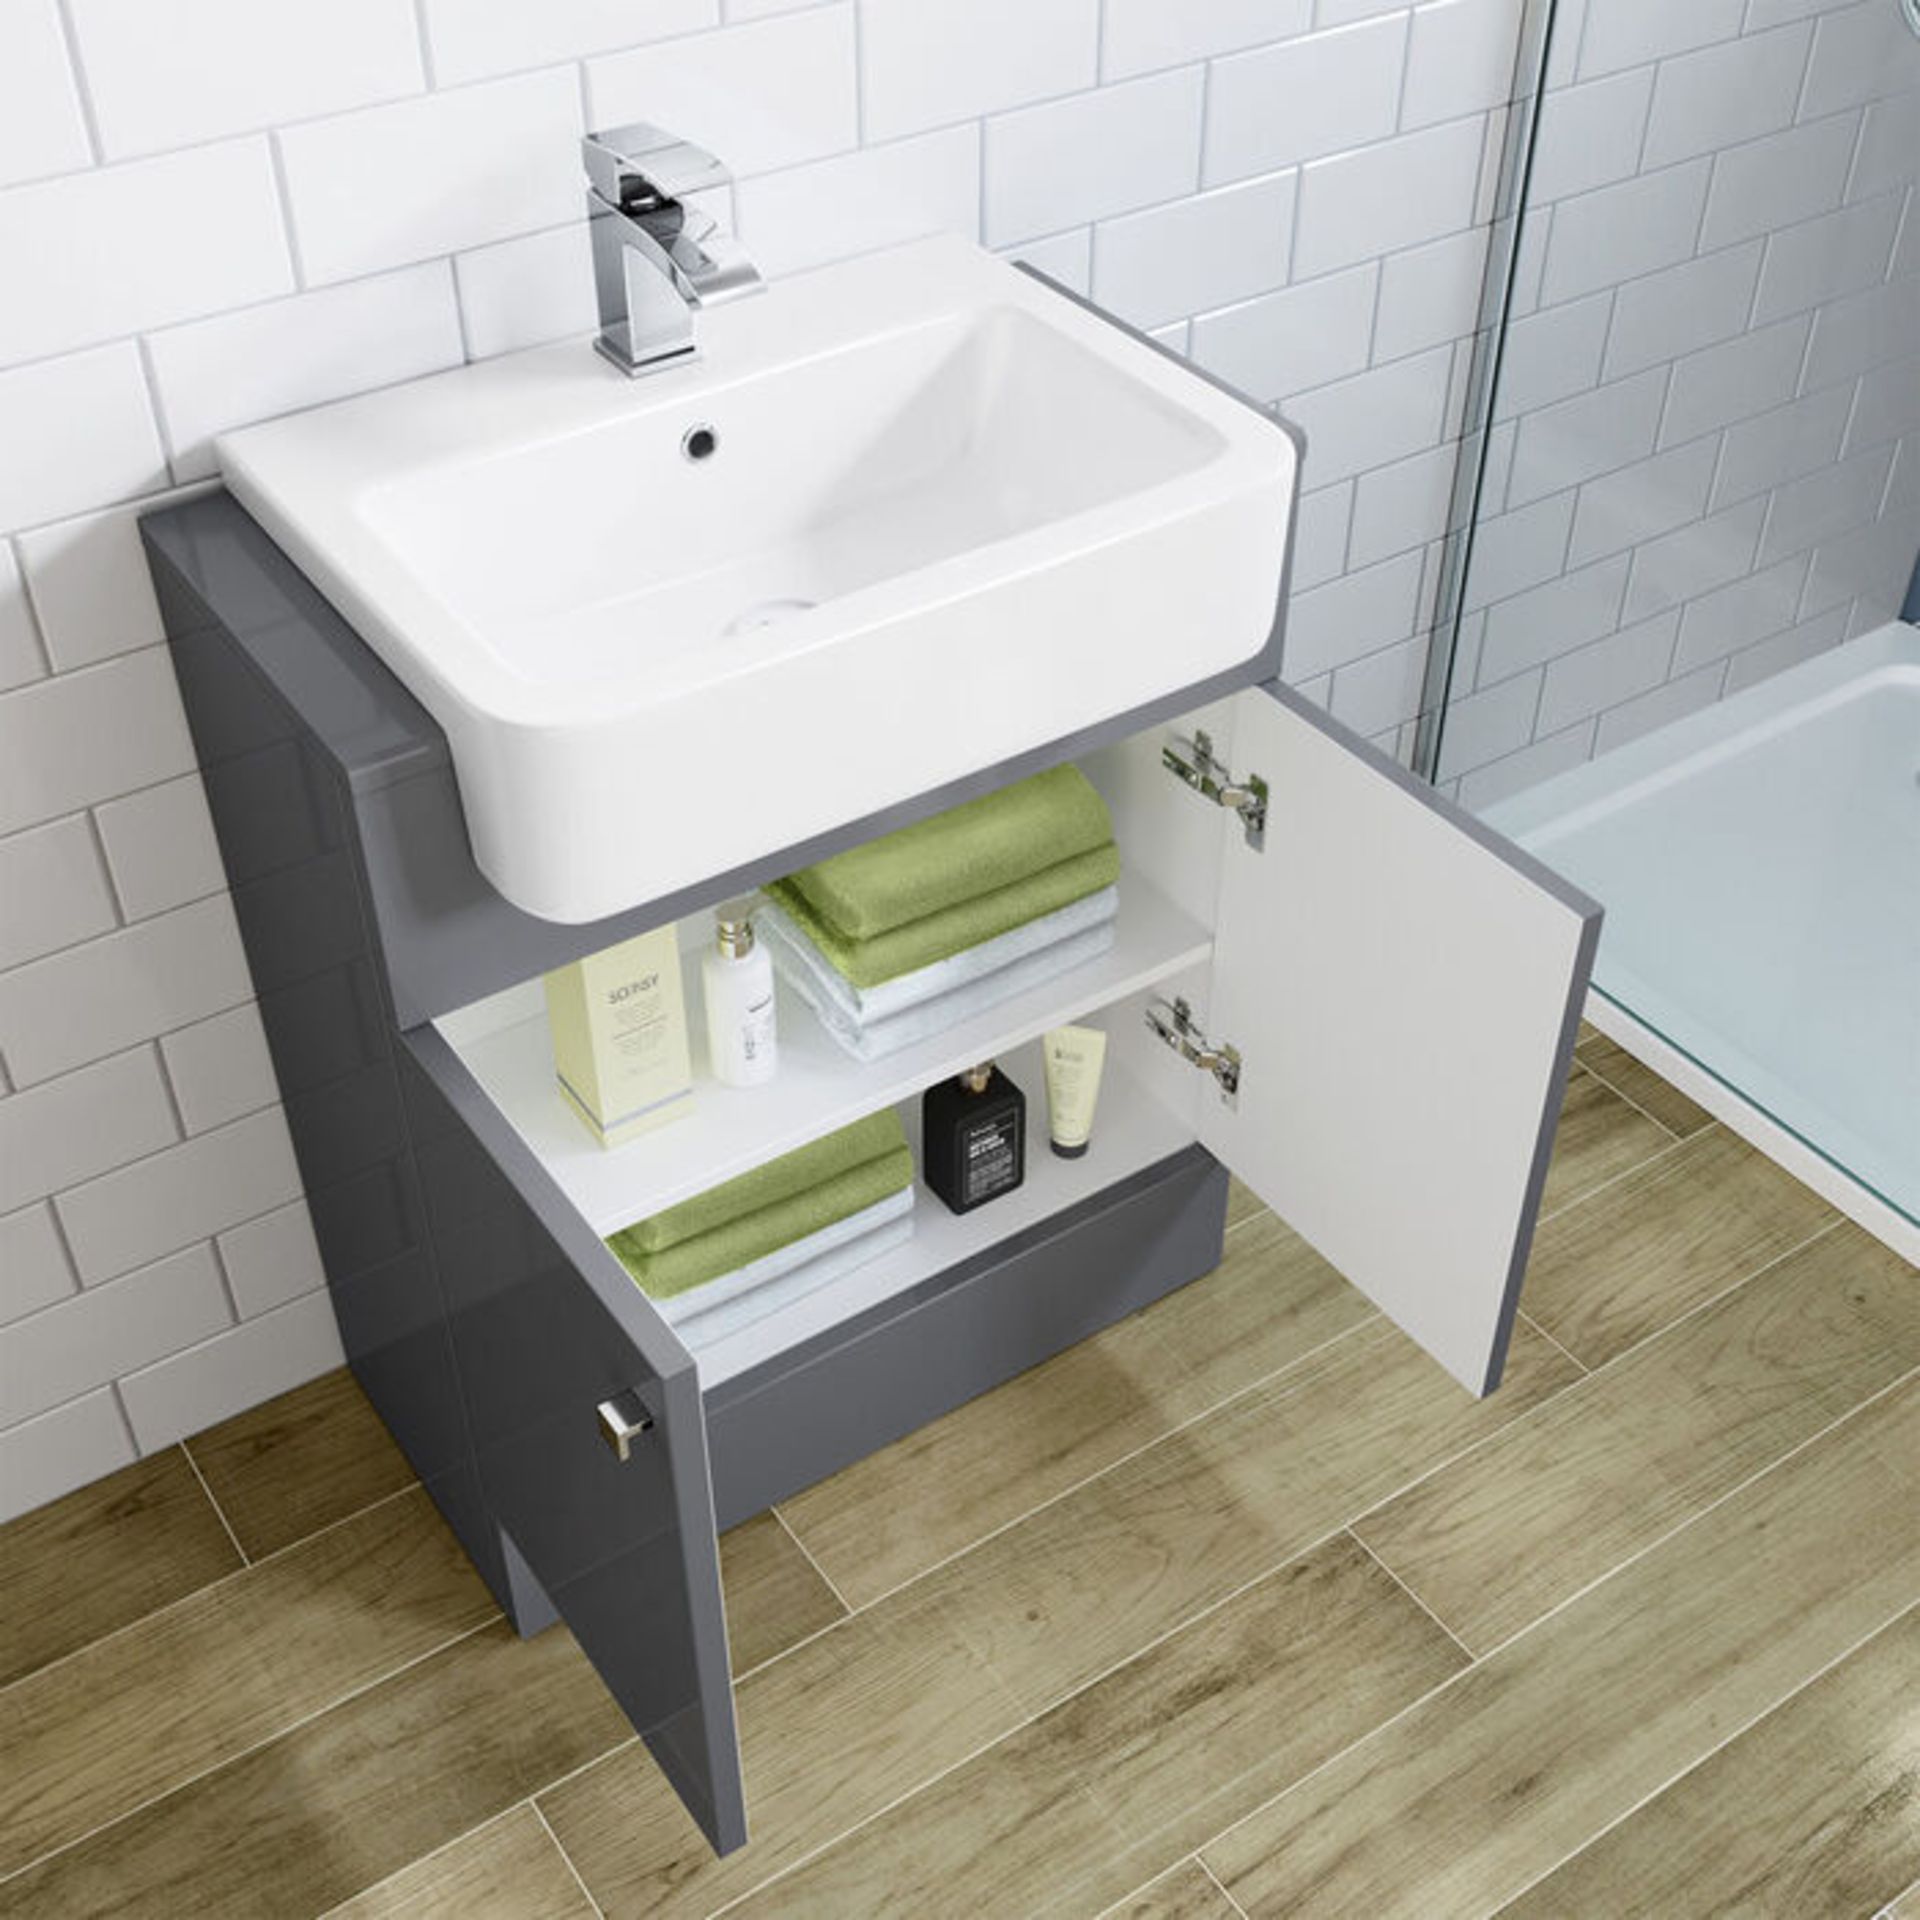 (AA27) 660mm Dayton Gloss Grey Sink Vanity Unit - Floor Standing. RRP £574.99. COMES COMPLETE ... - Image 2 of 5